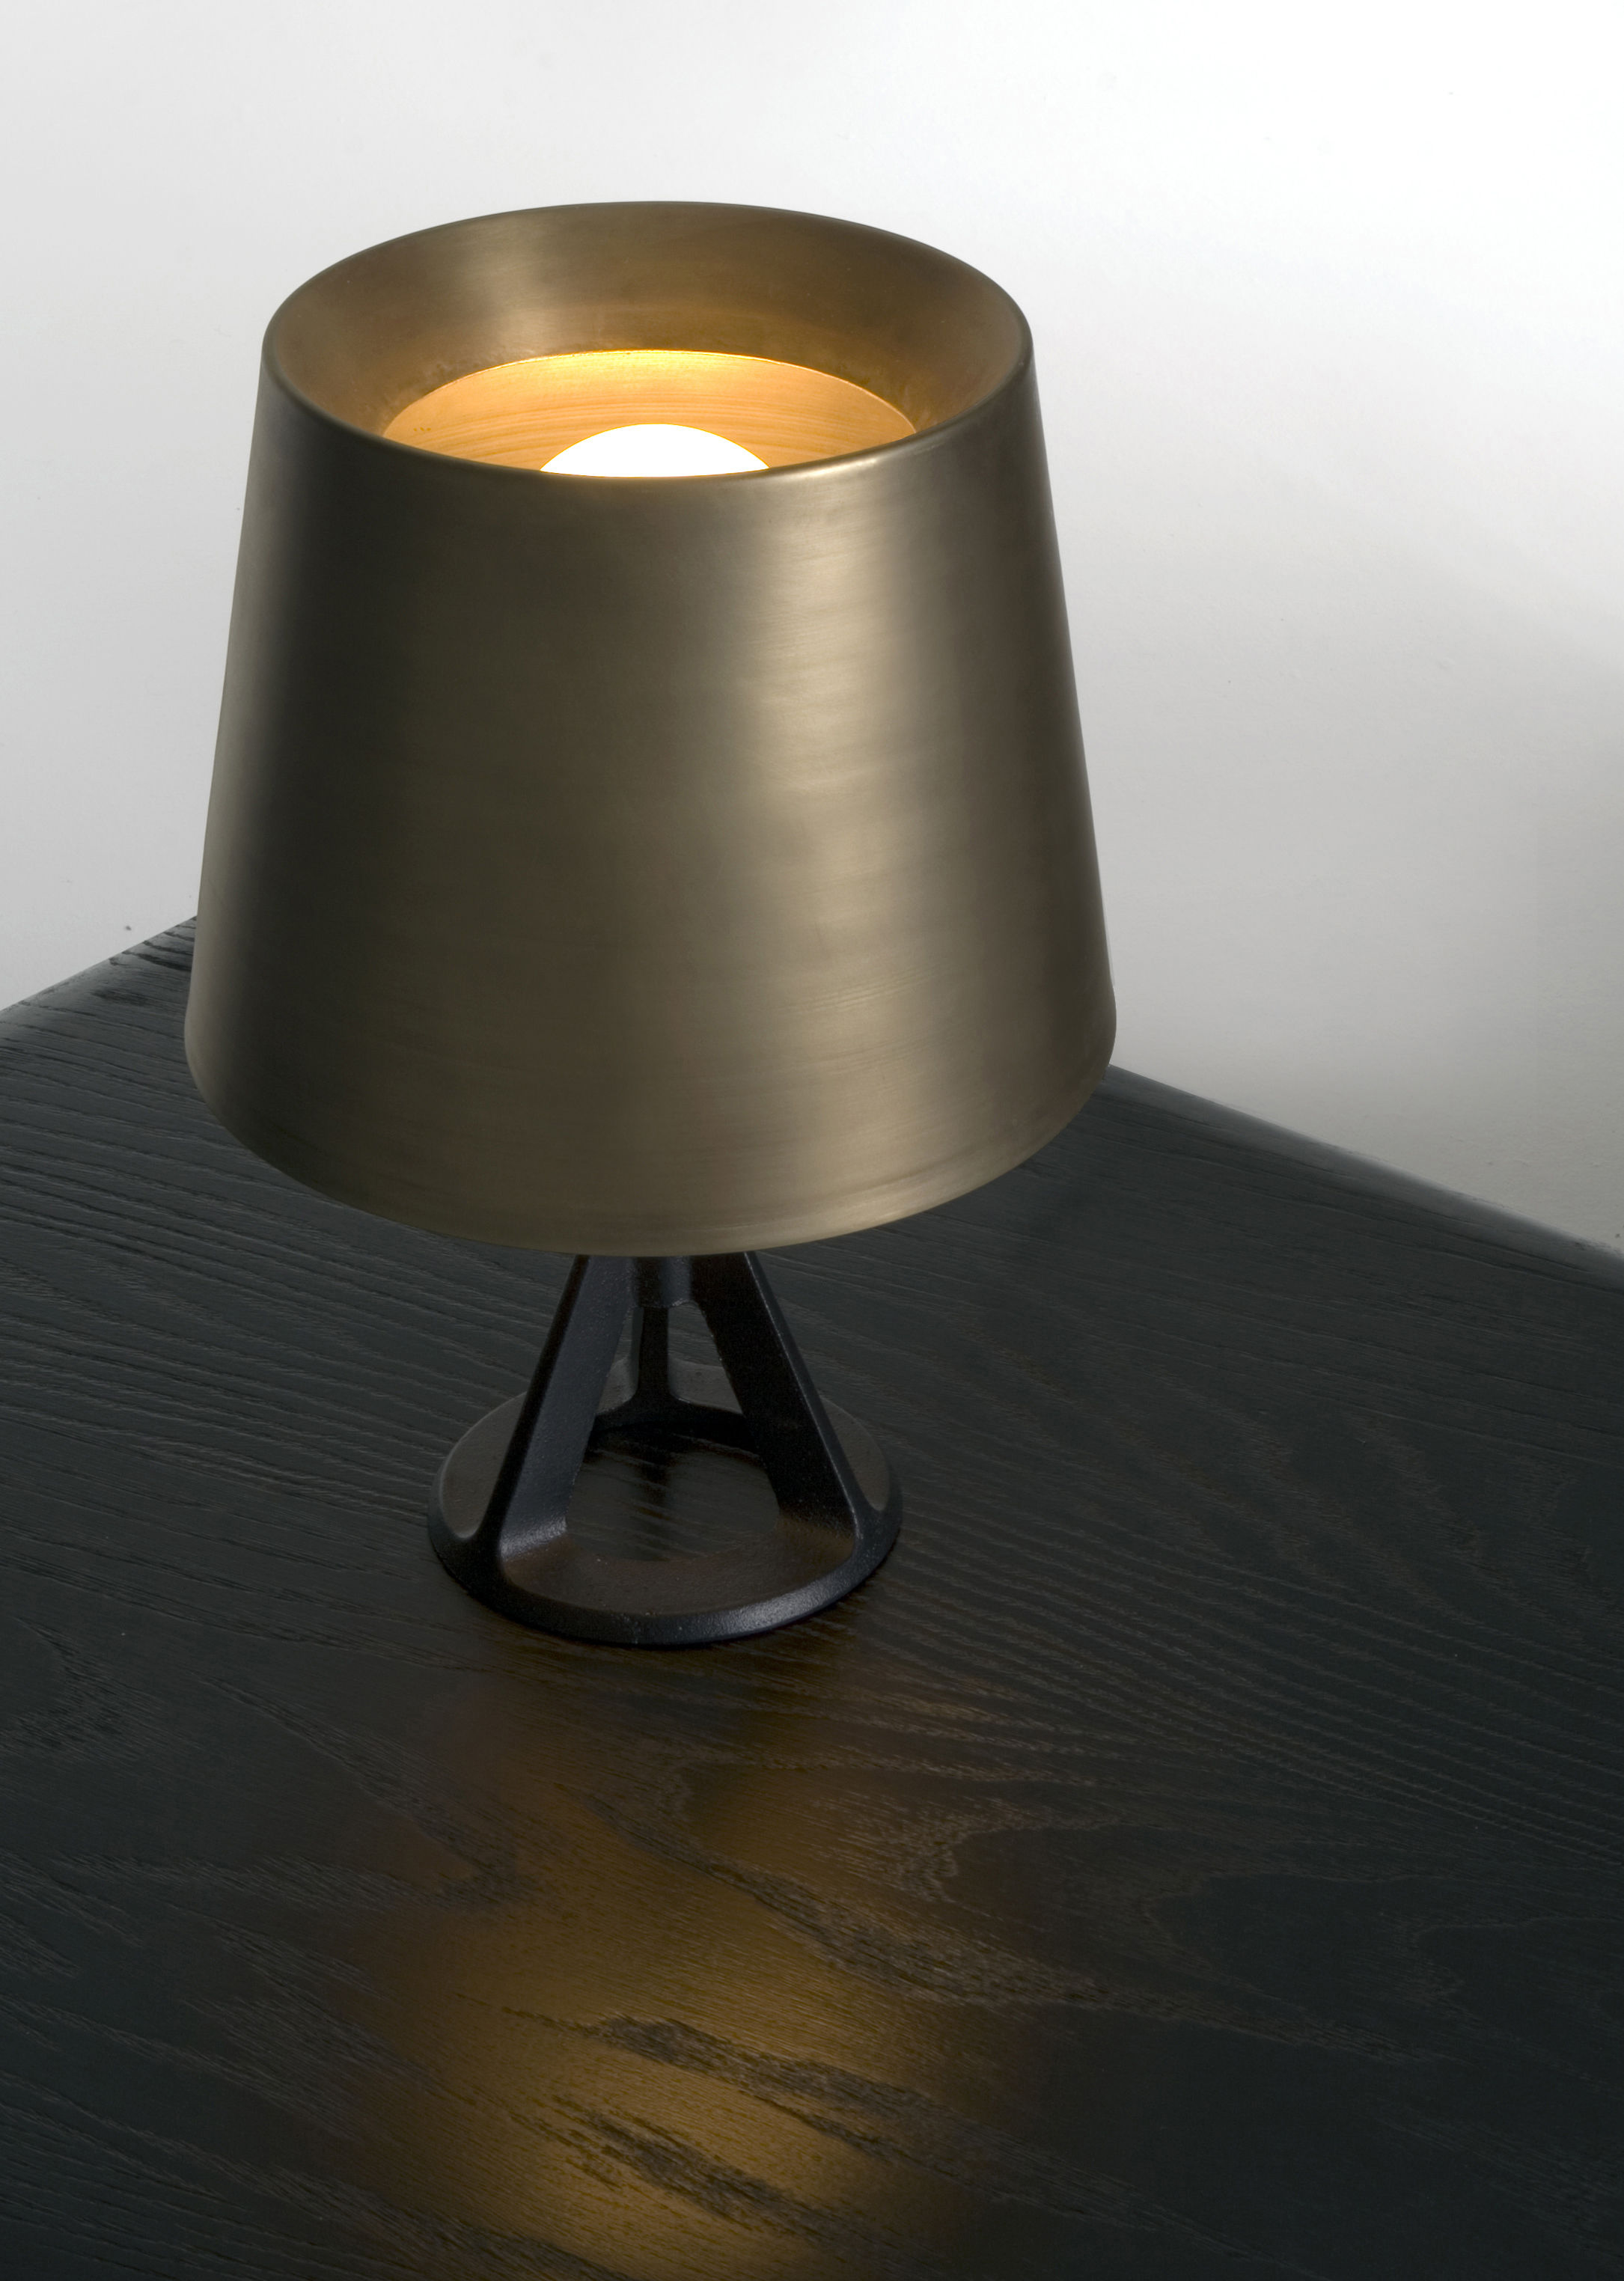 Tom Dixon Base Table Lamp Gold Made, Tom Dixon Base Table Lamp